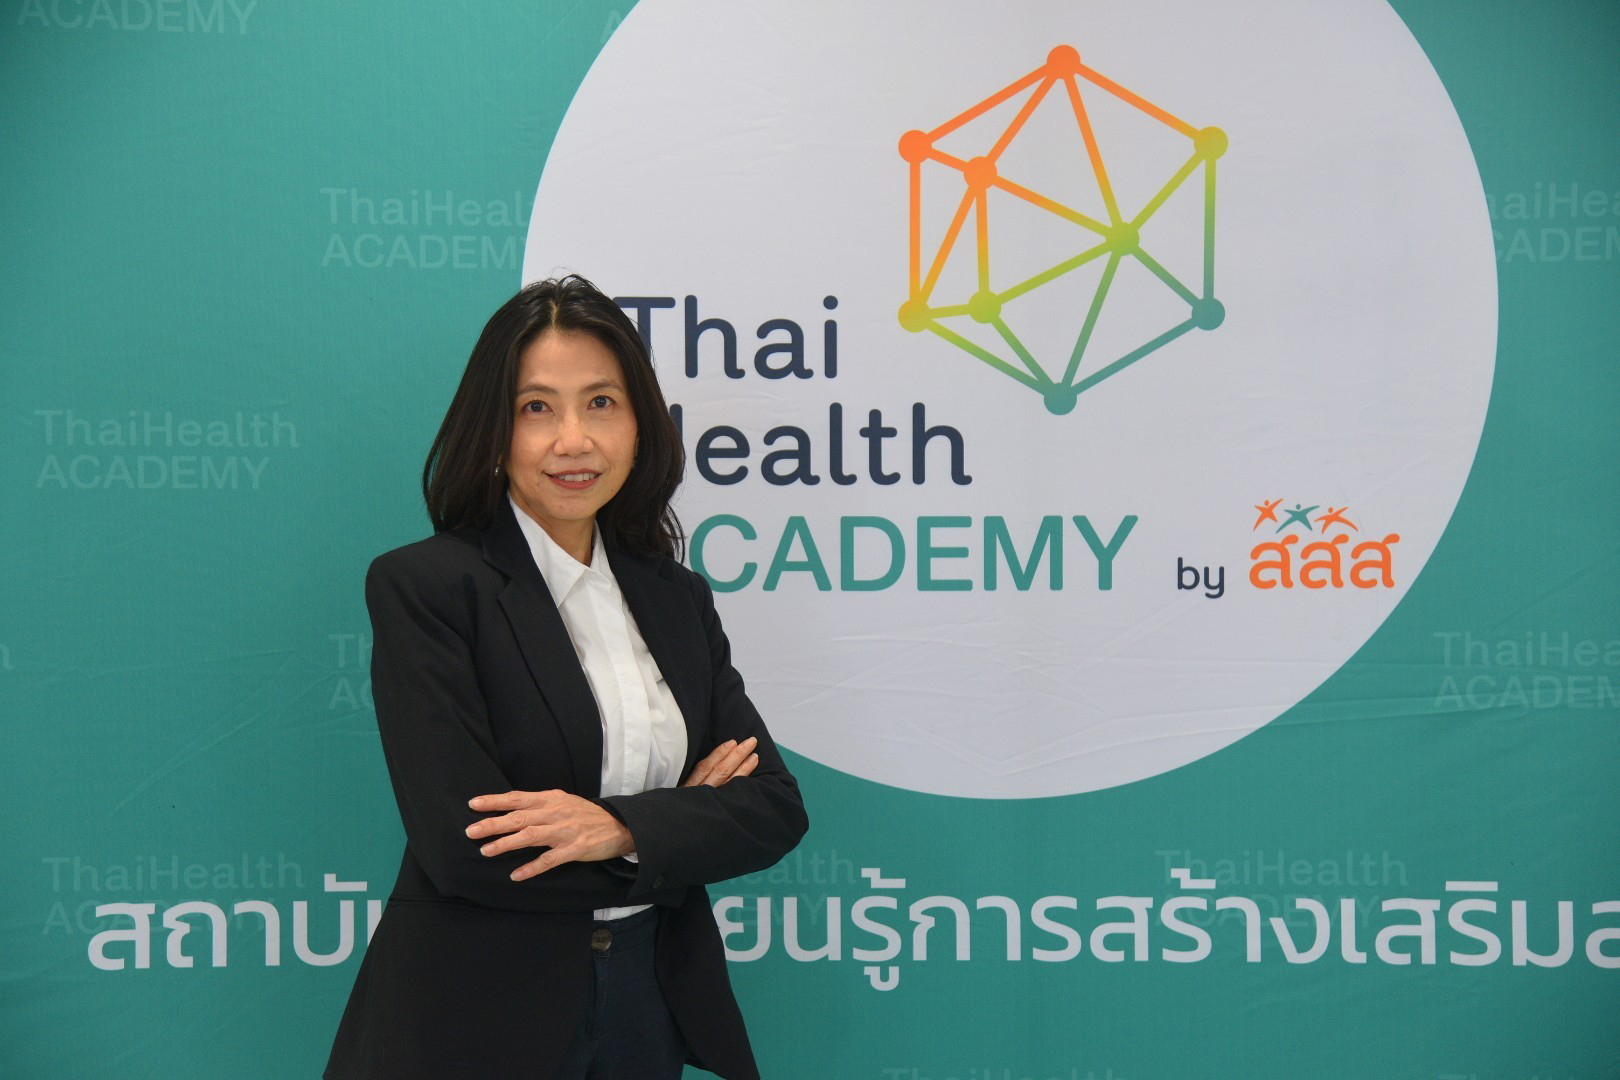  thaihealth